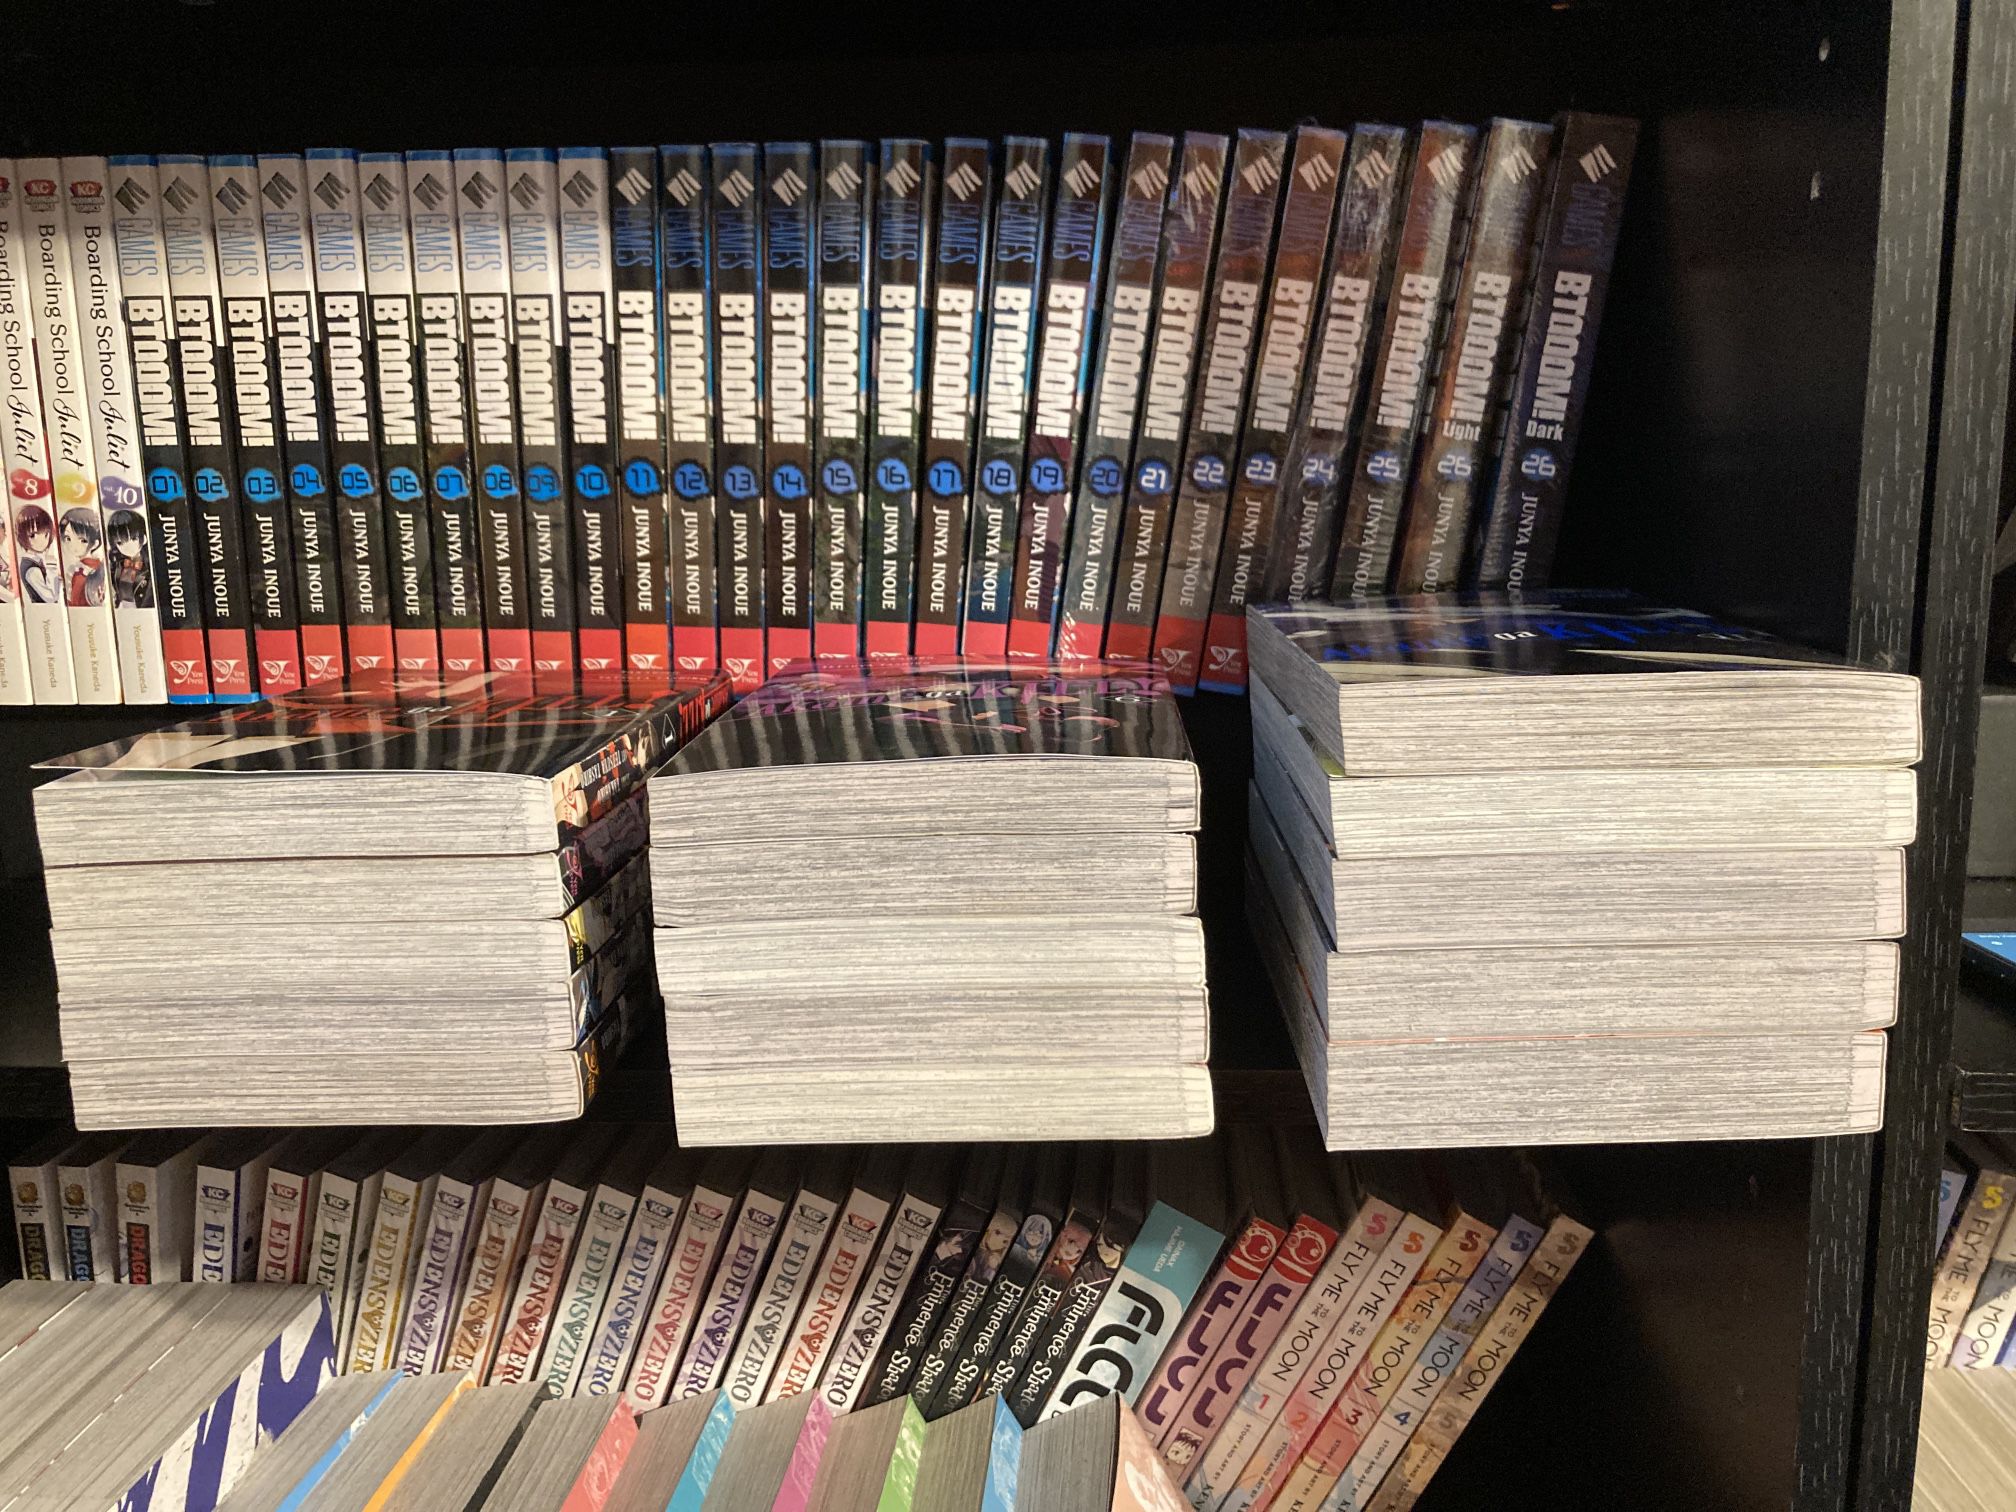 Akame Ga Kill! Zero Volume 2 for Sale in Bonney Lake, WA - OfferUp